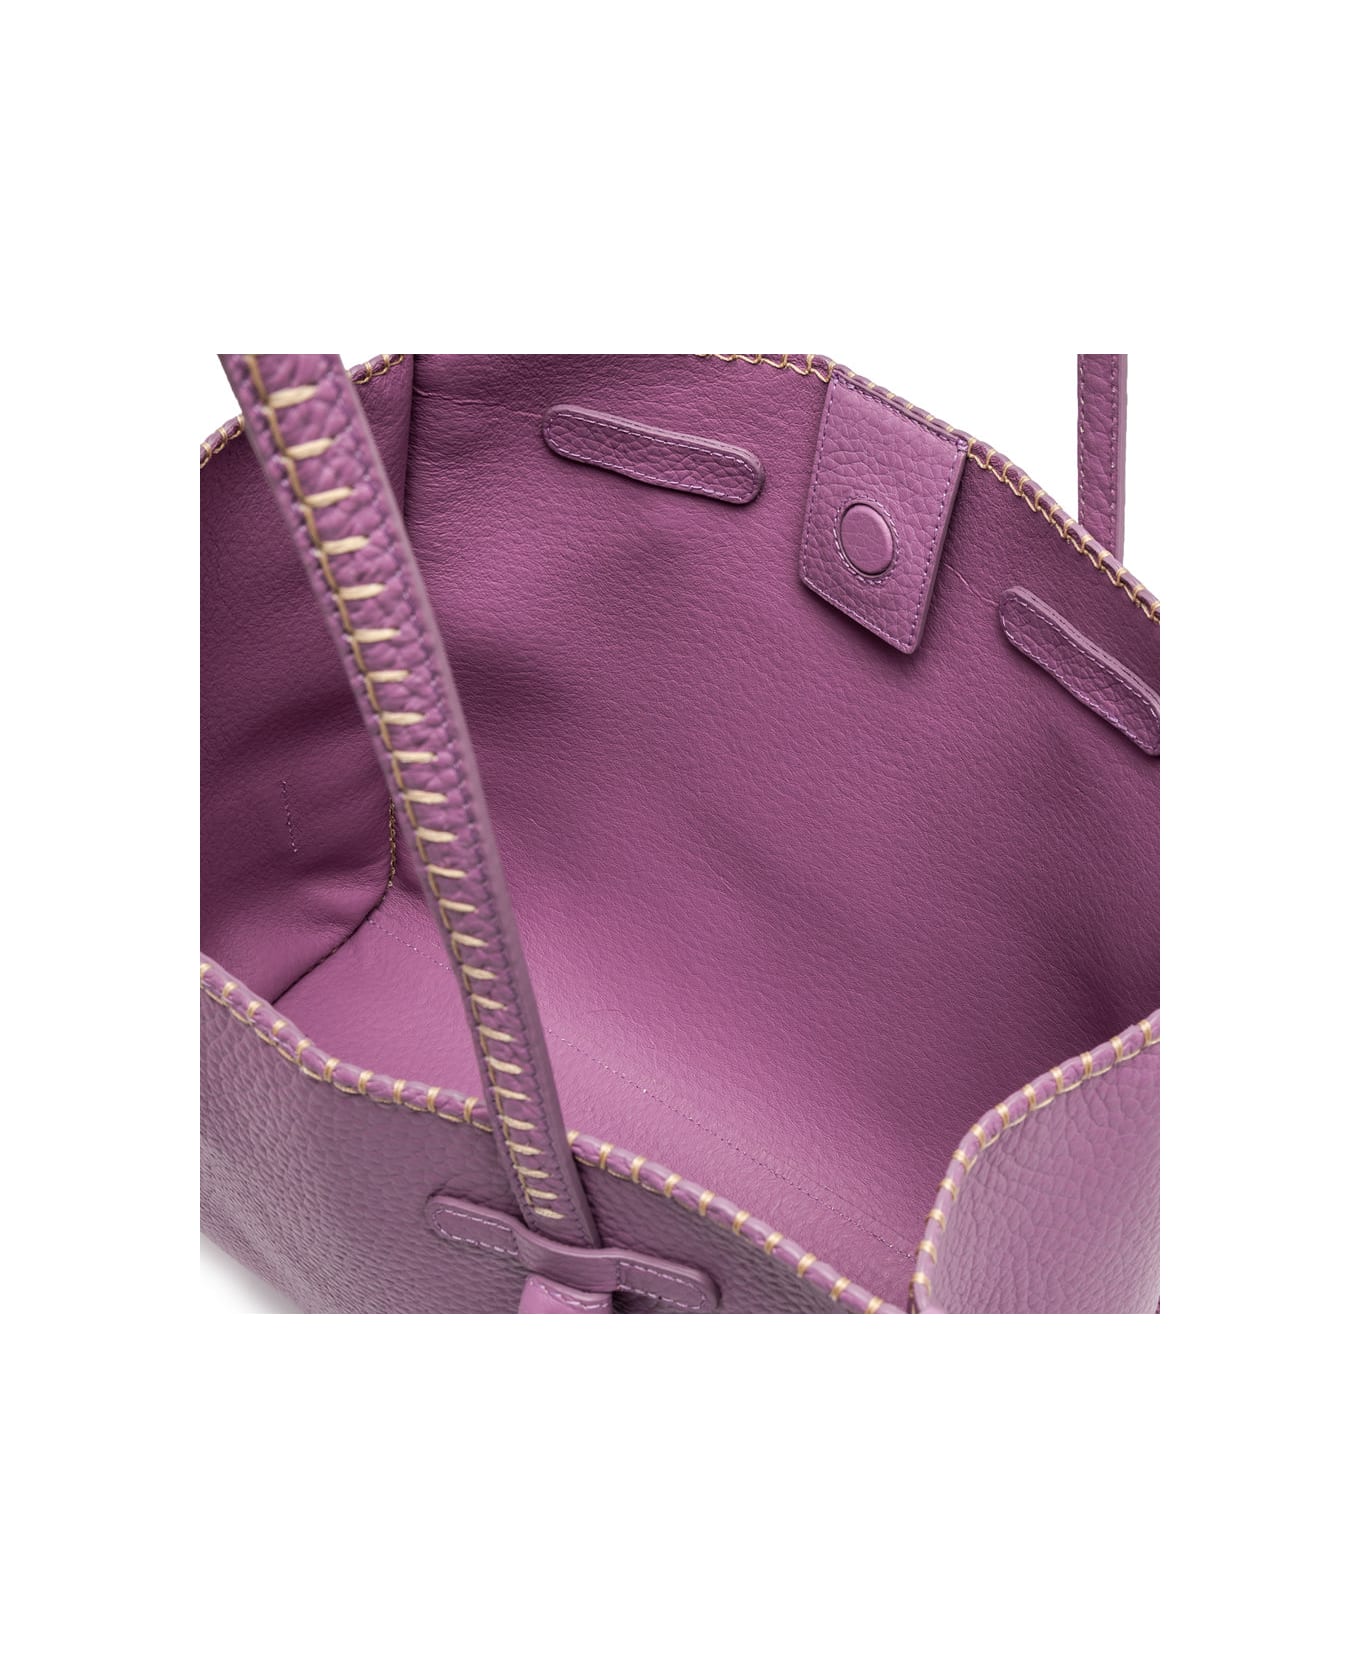 Gianni Chiarini Bag Marcella - Argyle Purple トートバッグ